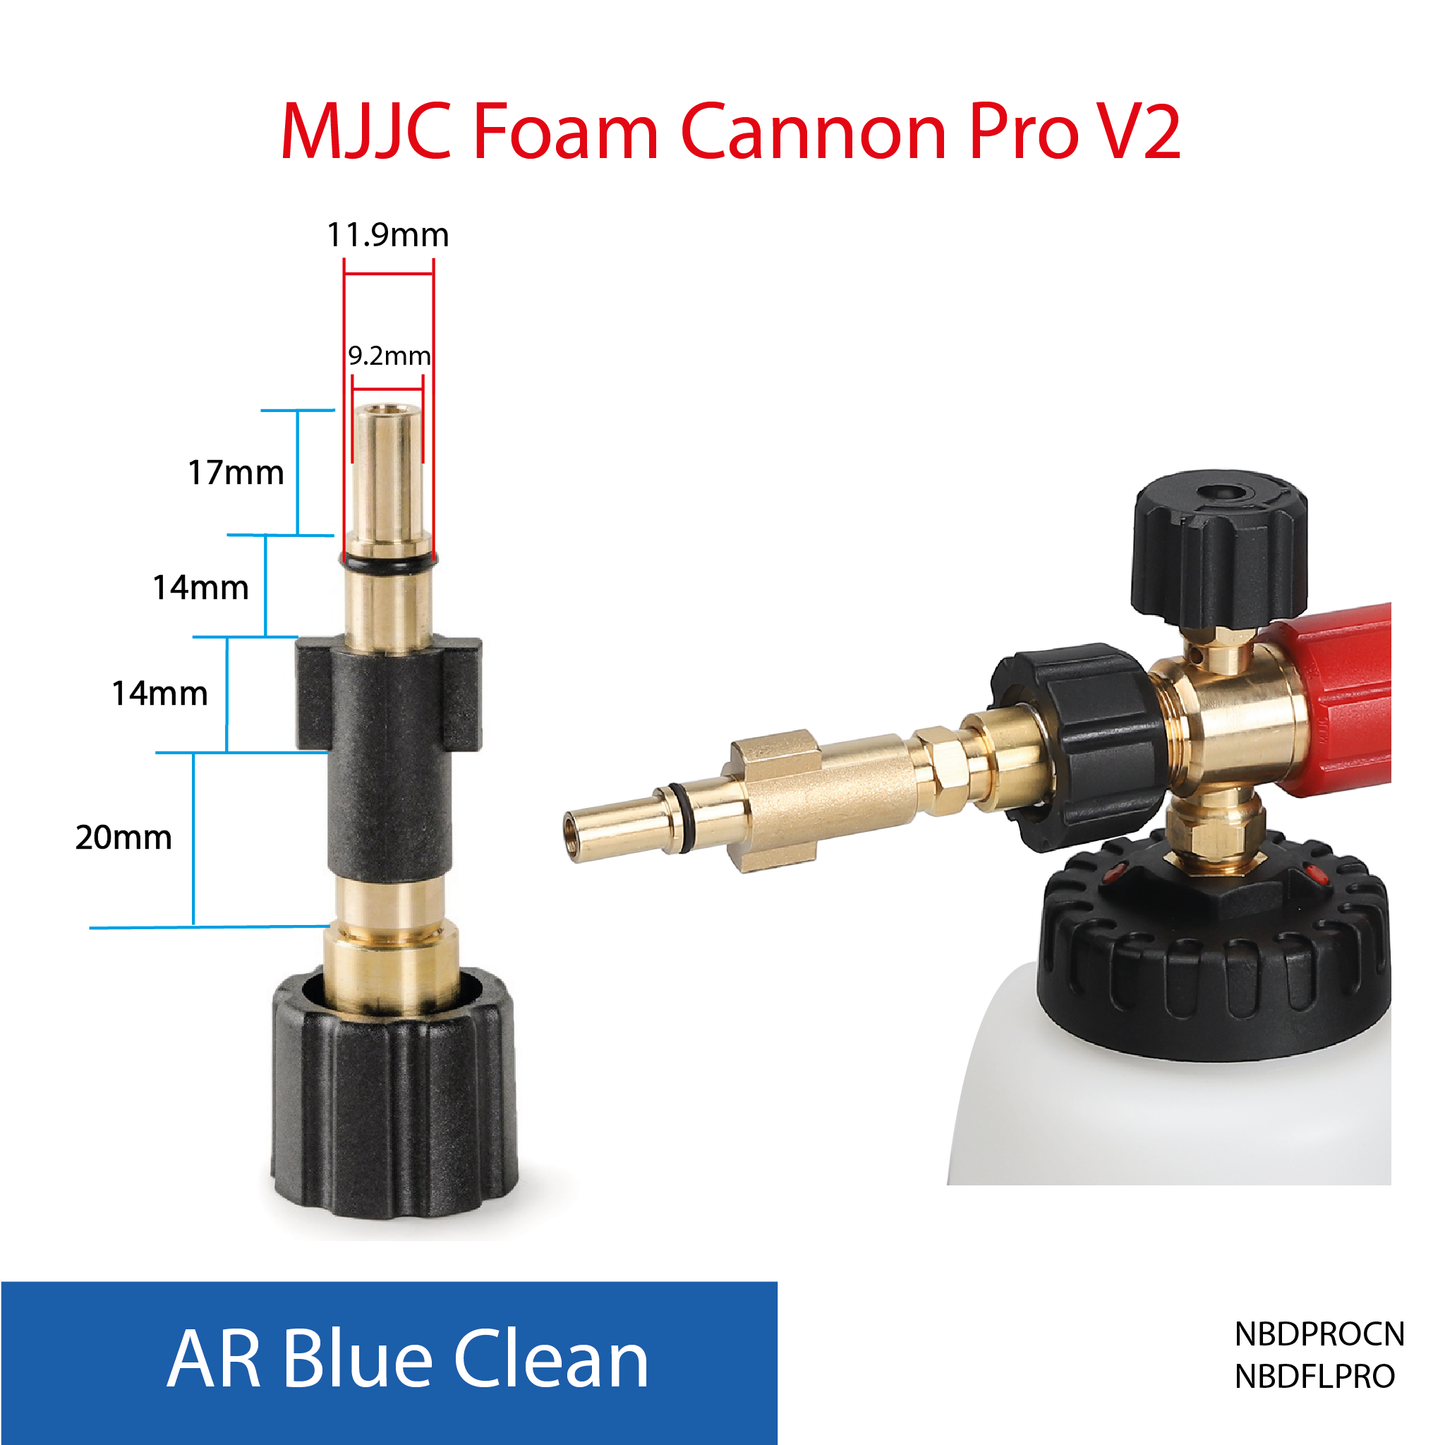 AR Blue Clean pressure washer - MJJC Foam Cannon Pro V2 (Pressure Washer Snow Foam Lance Gun)